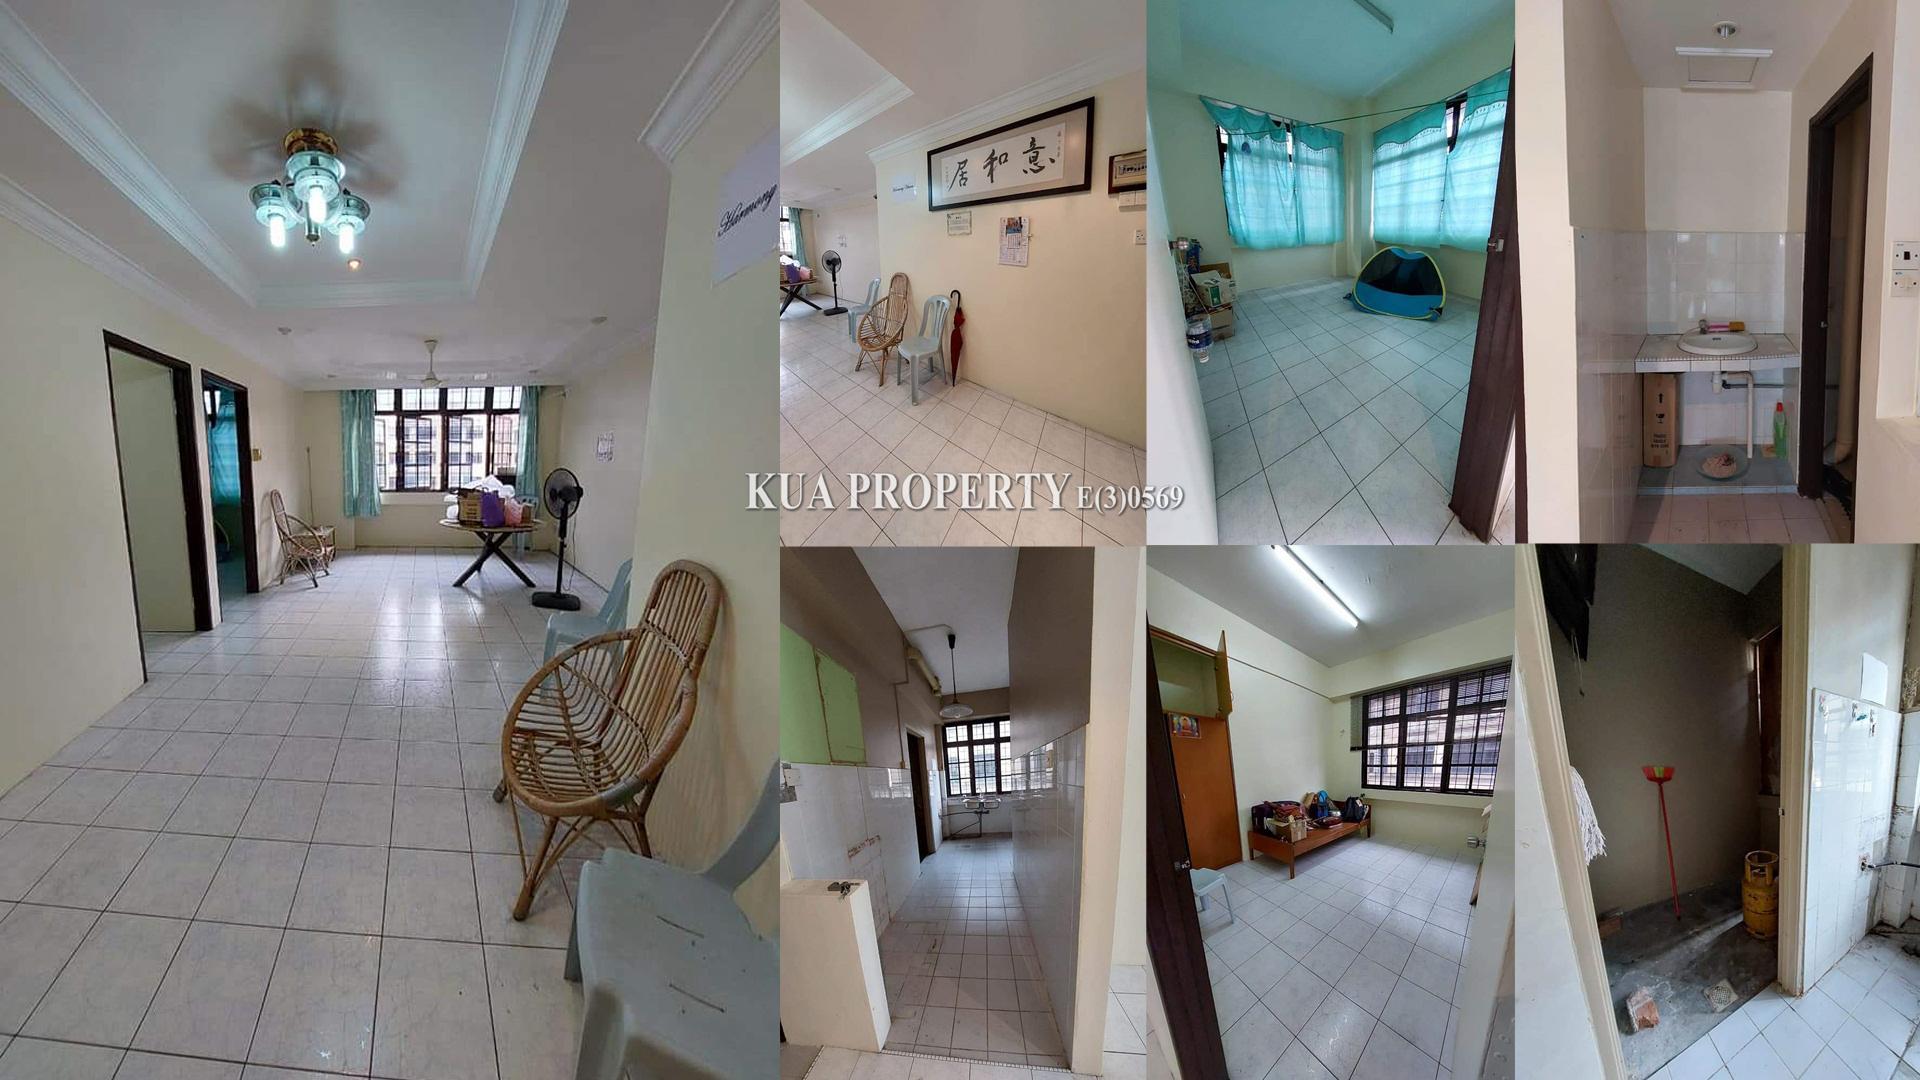 2nd Floor MJC Soho Apartment For Sale! at Batu Kawa